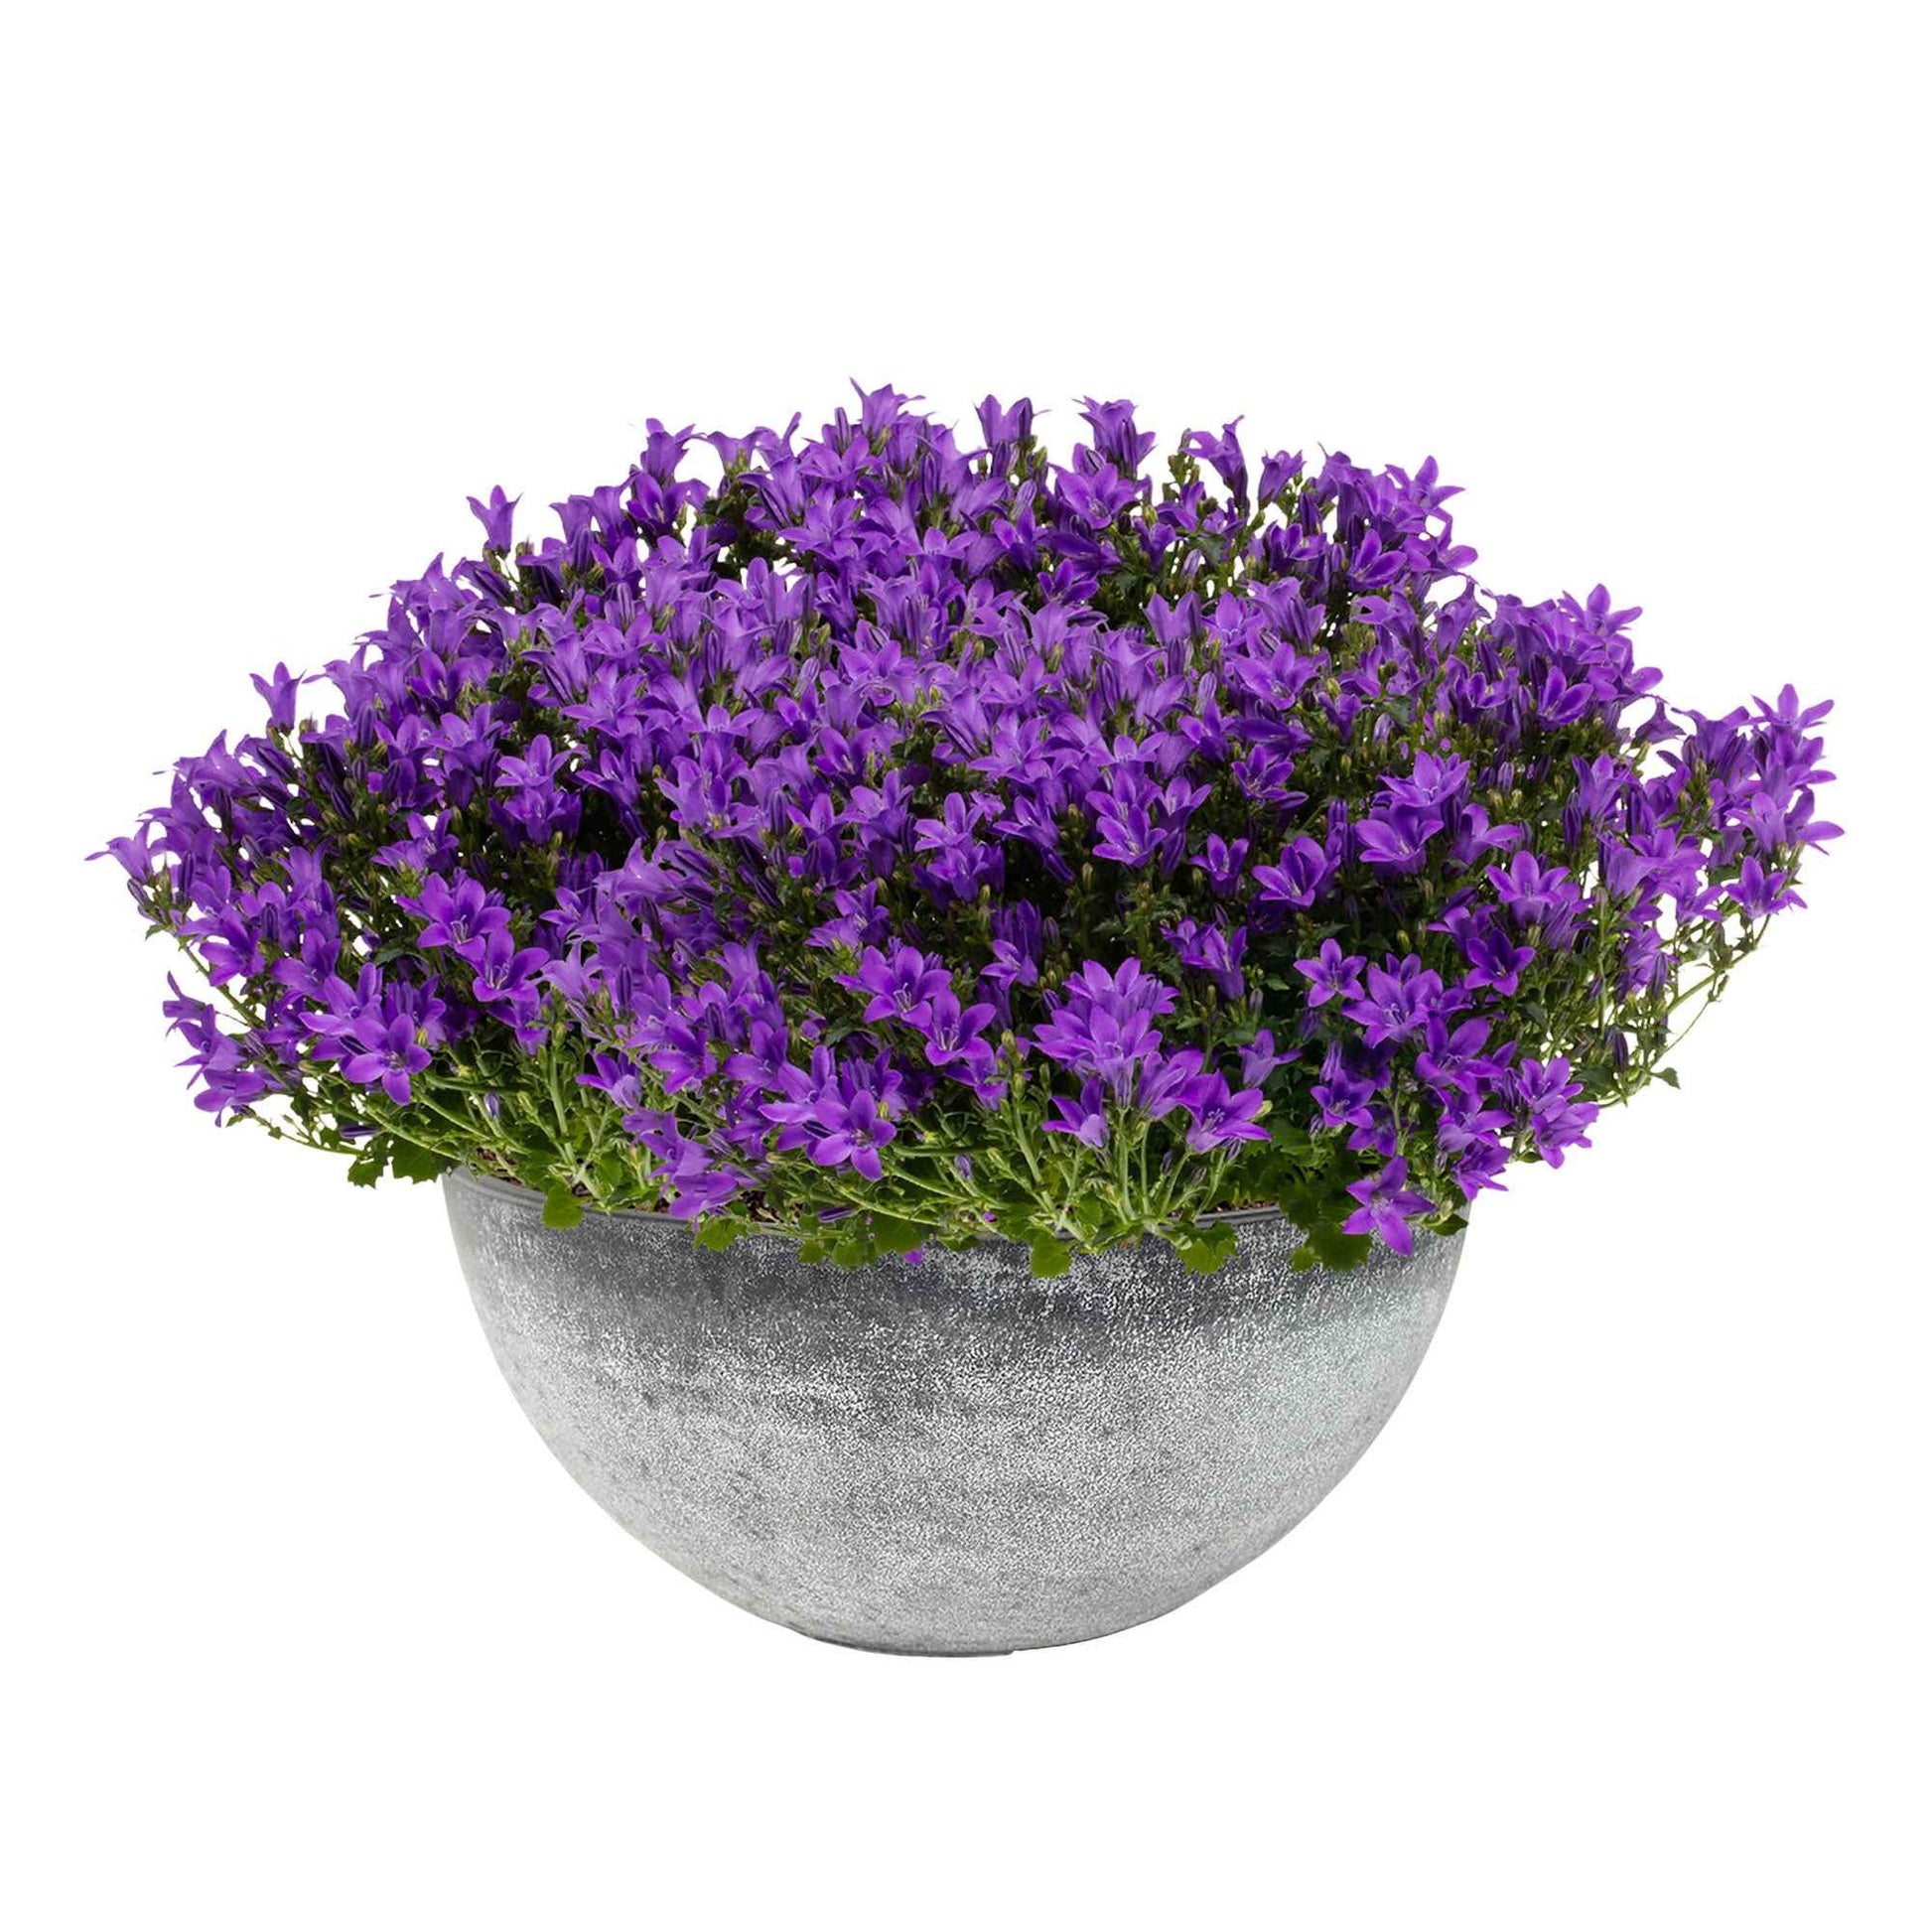 3x Klokjesbloem Campanula Ambella Intense Purple paars incl. schaal grijs - Alle tuinplanten in pot